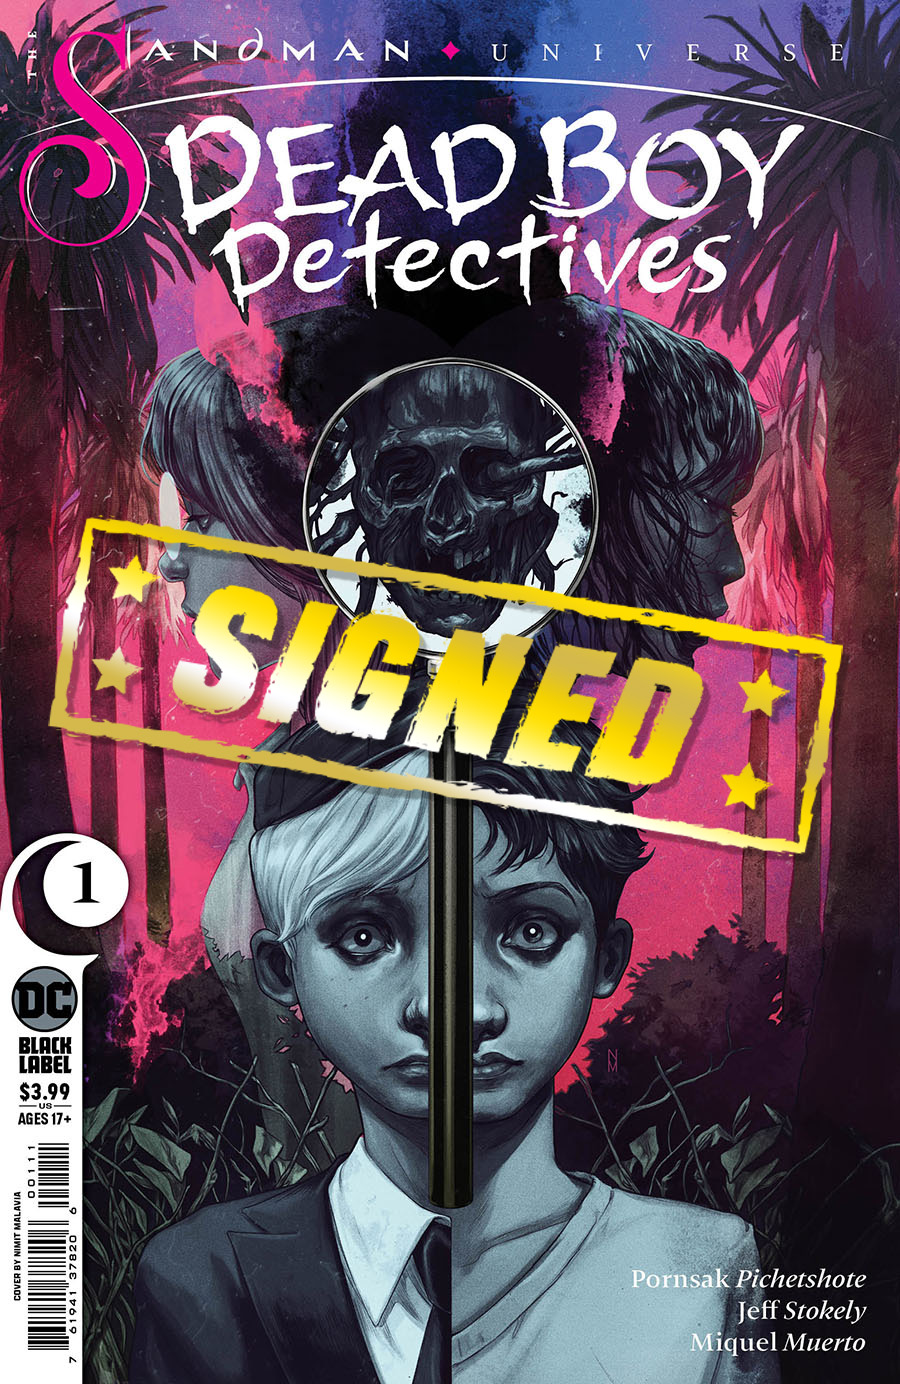 Sandman Universe Dead Boy Detectives #1 Cover F Regular Nimit Malavia Cover Signed By Pornsak Pichetshote